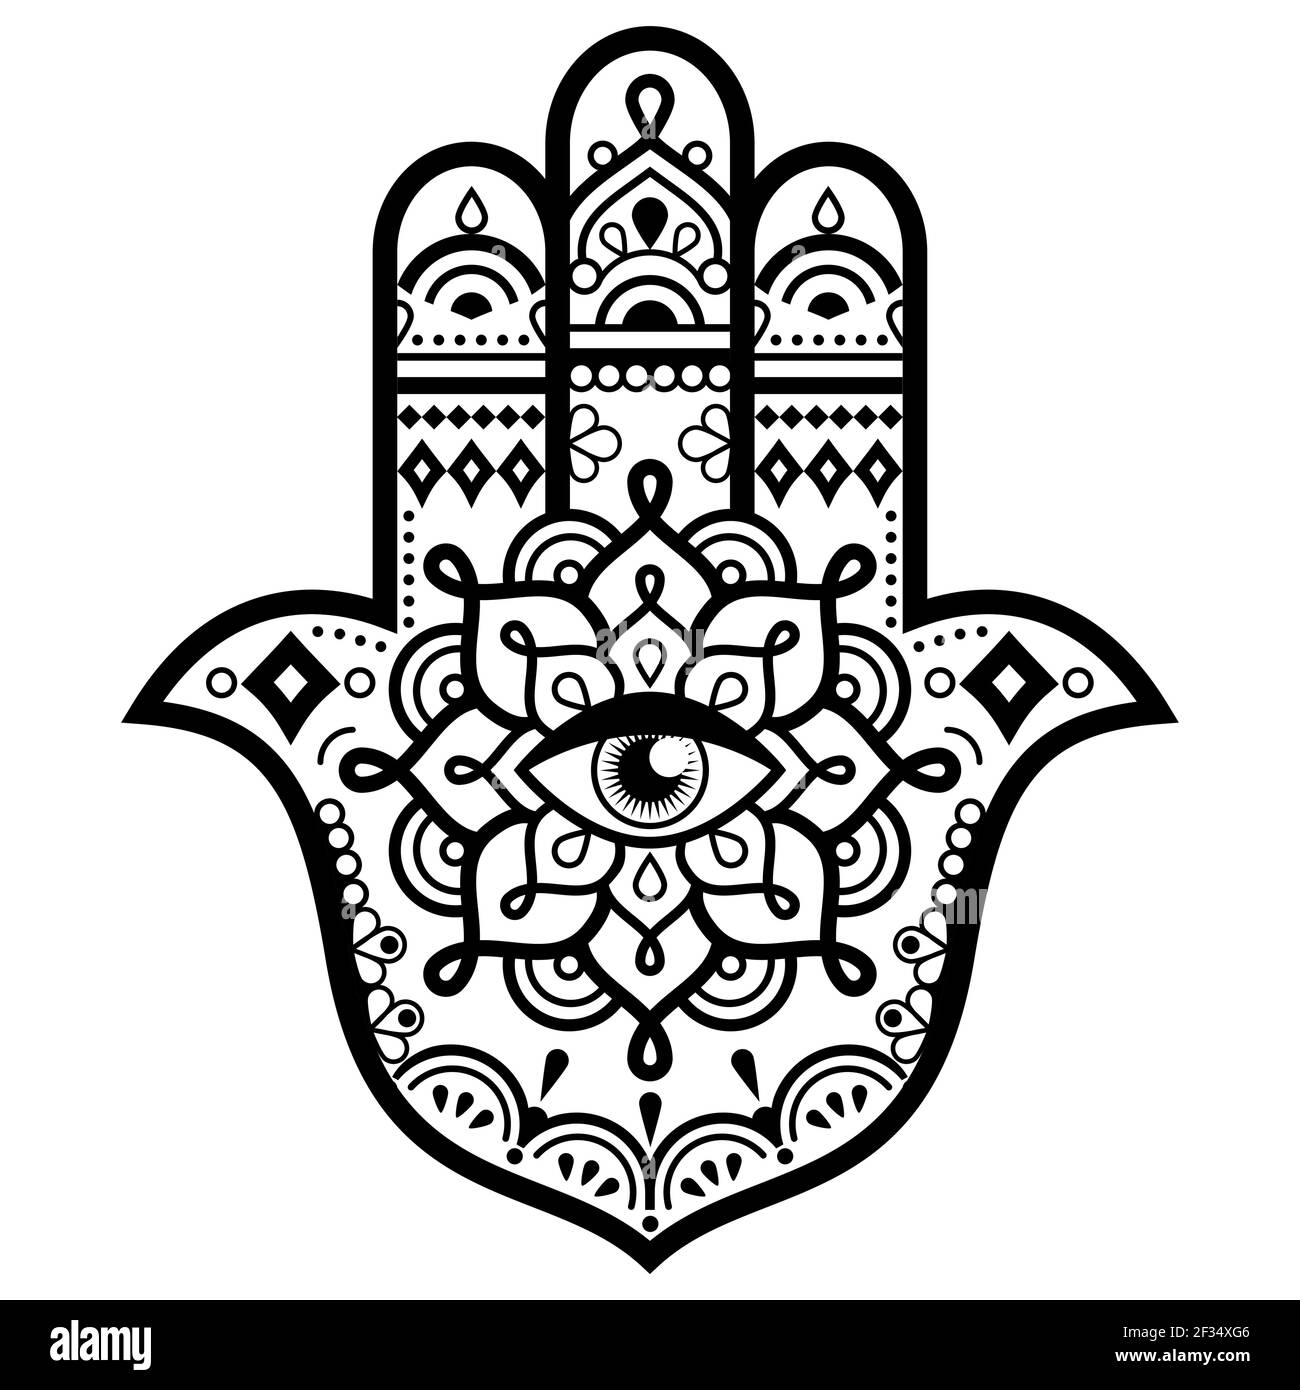 Hamsa hand with mandala vector design - decorative evil eye symbol of protection Stock Vector